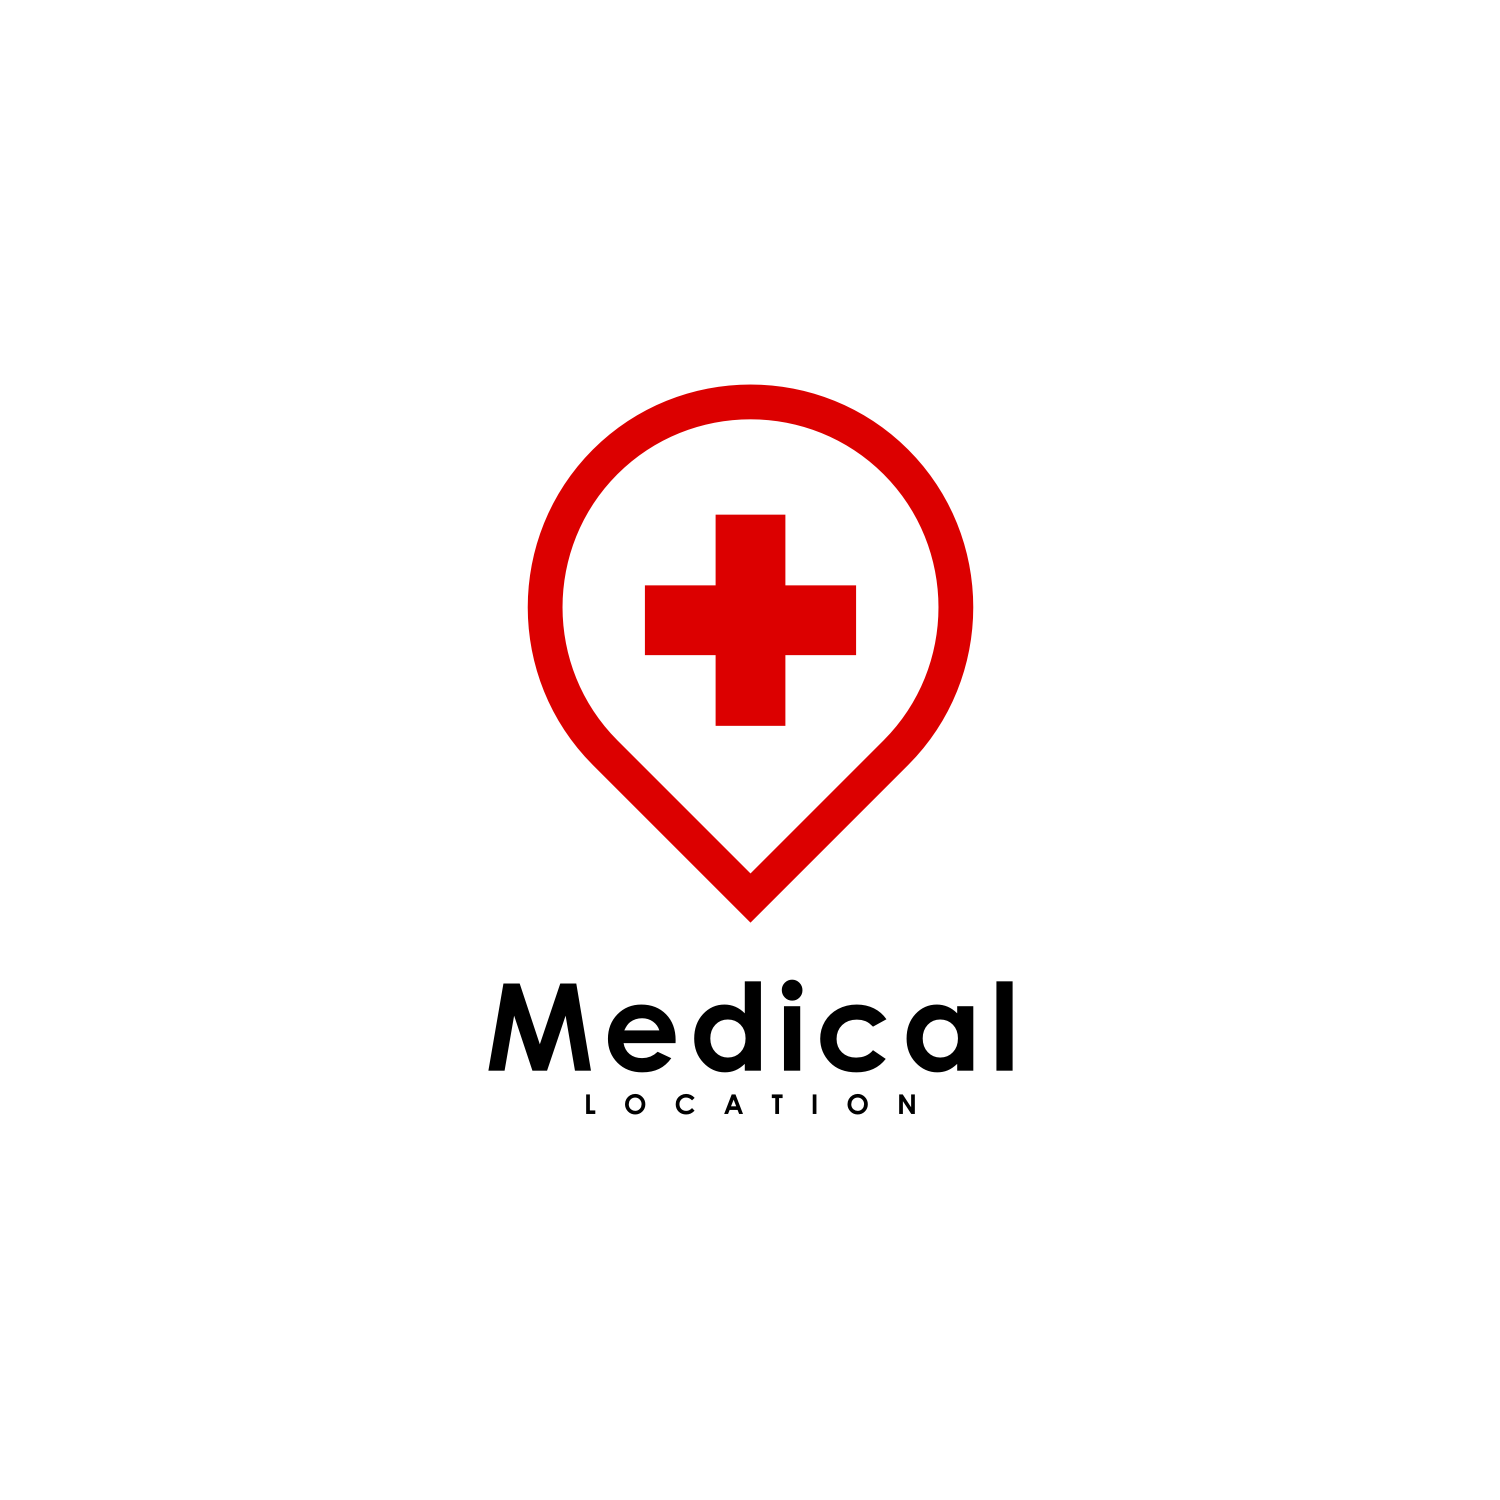 Eco Product, Medical Plus / Cross, Healthcare Logo Ideas. Inspiration Logo  Design. Template Vector Illustration Stock Vector - Illustration of  product, design: 175670225